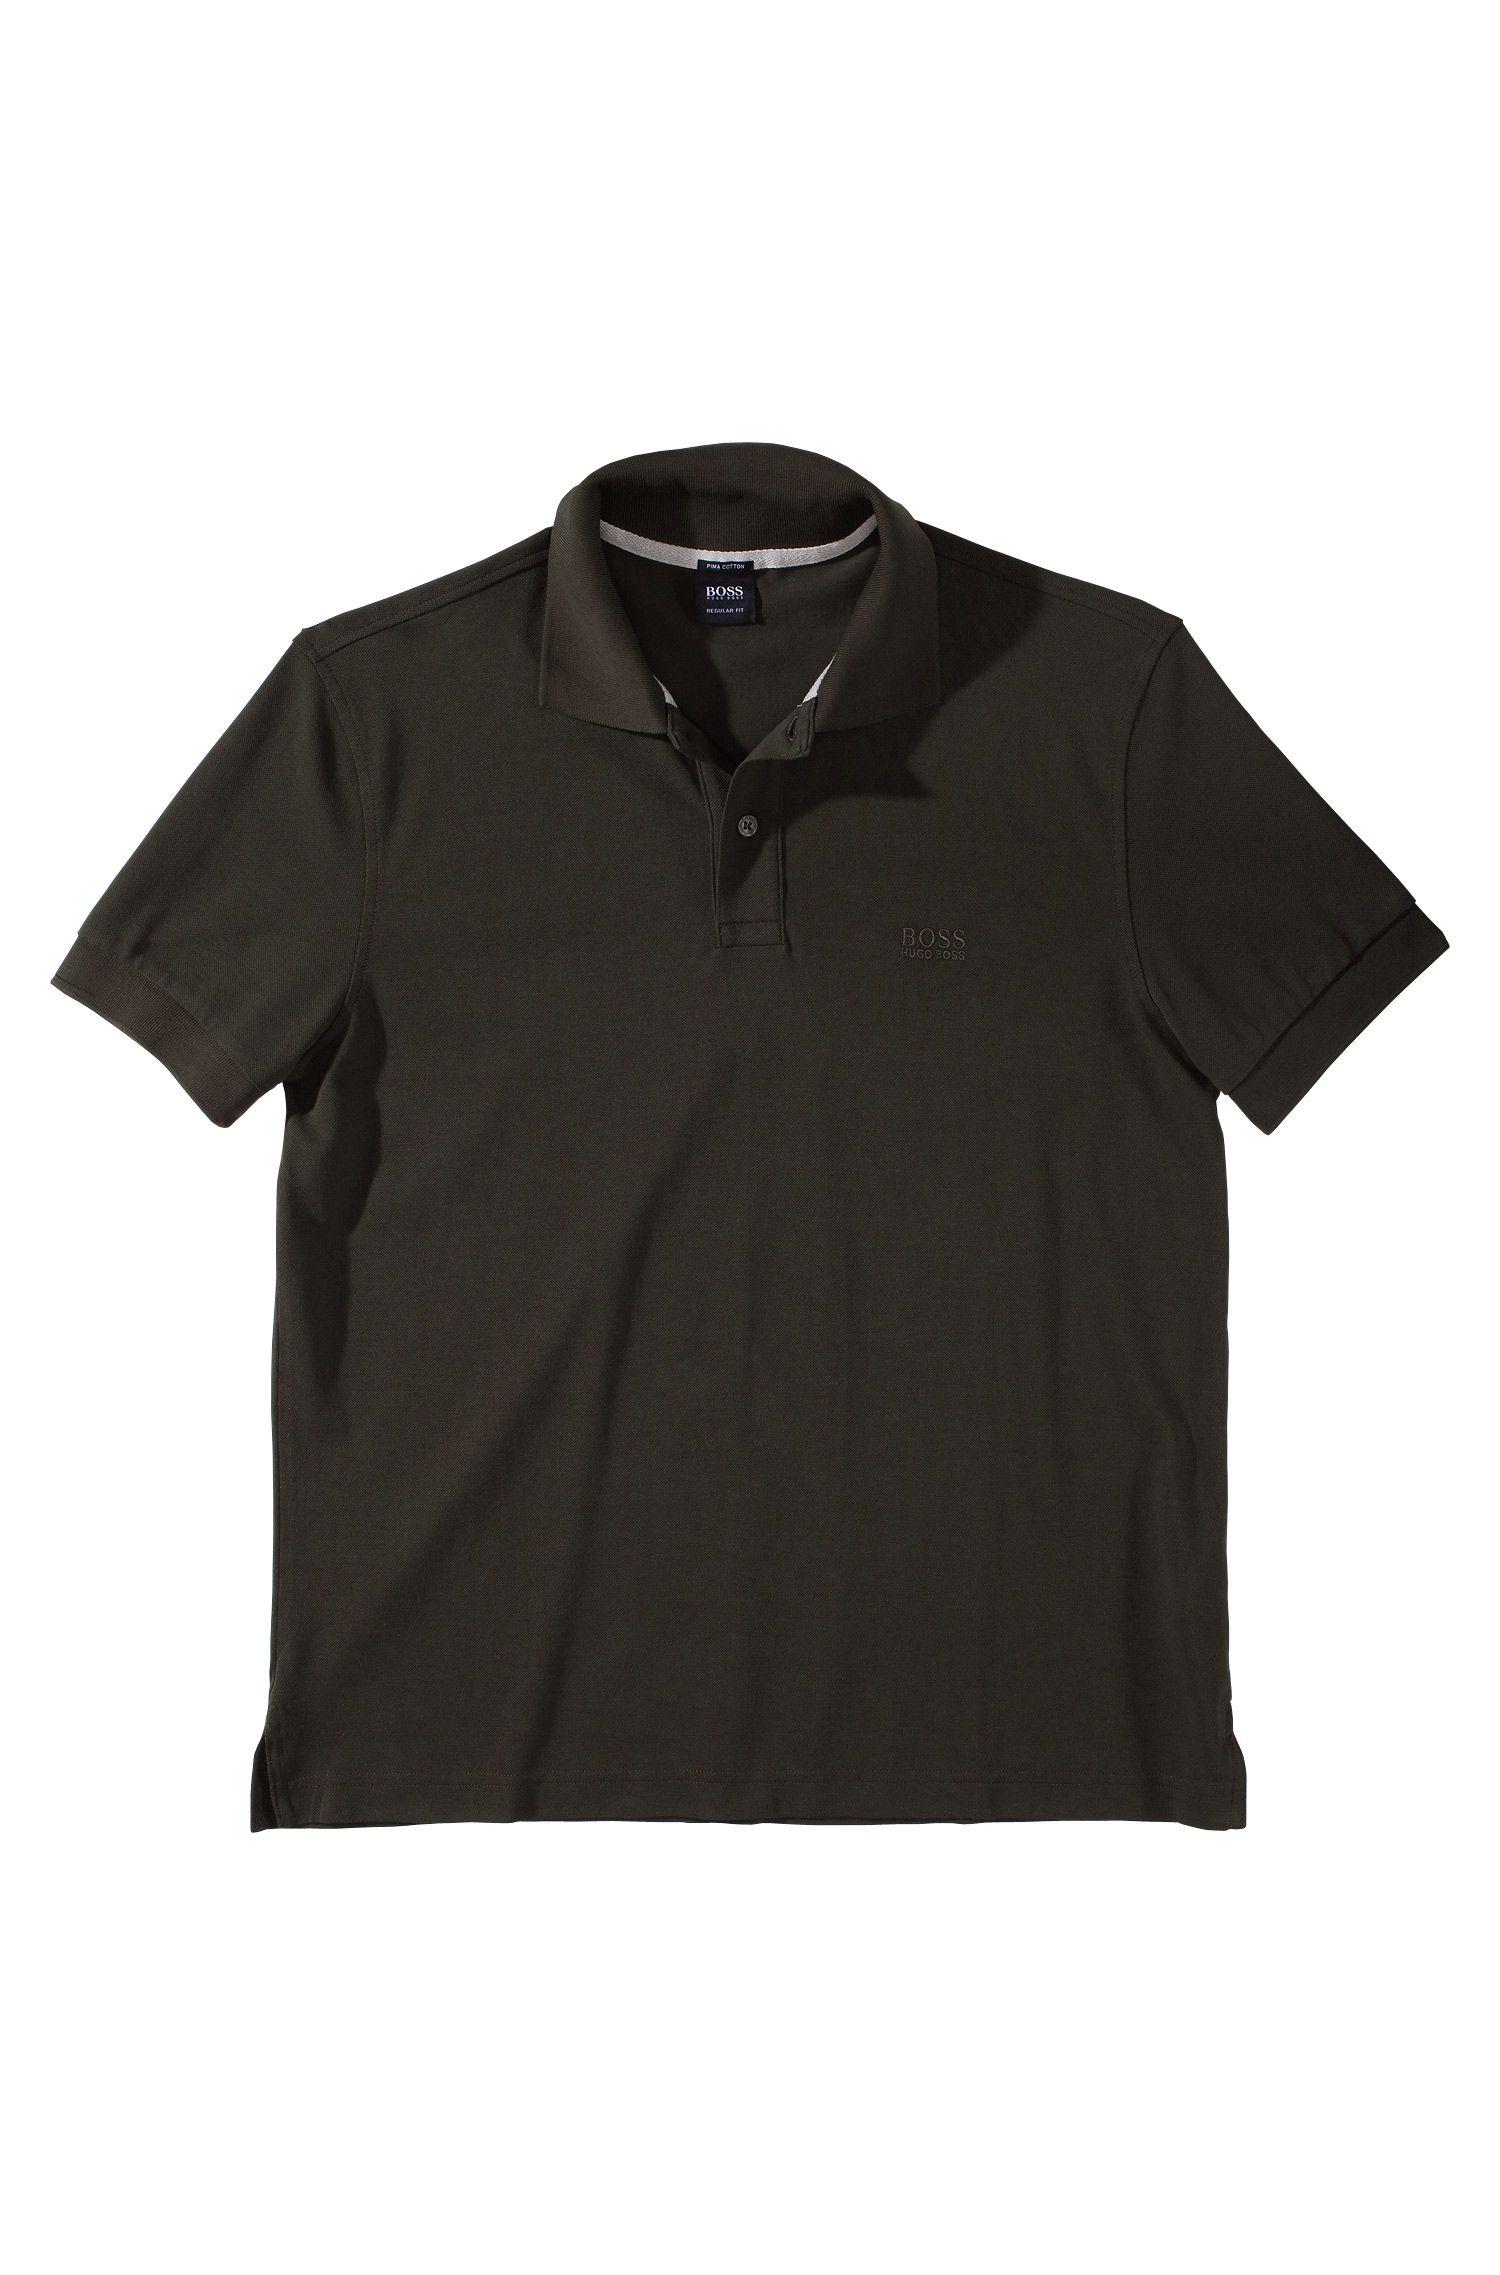 BOSS by HUGO BOSS Cotton Polo Shirt 'firenze/logo Modern Essential' in  Black for Men | Lyst Canada